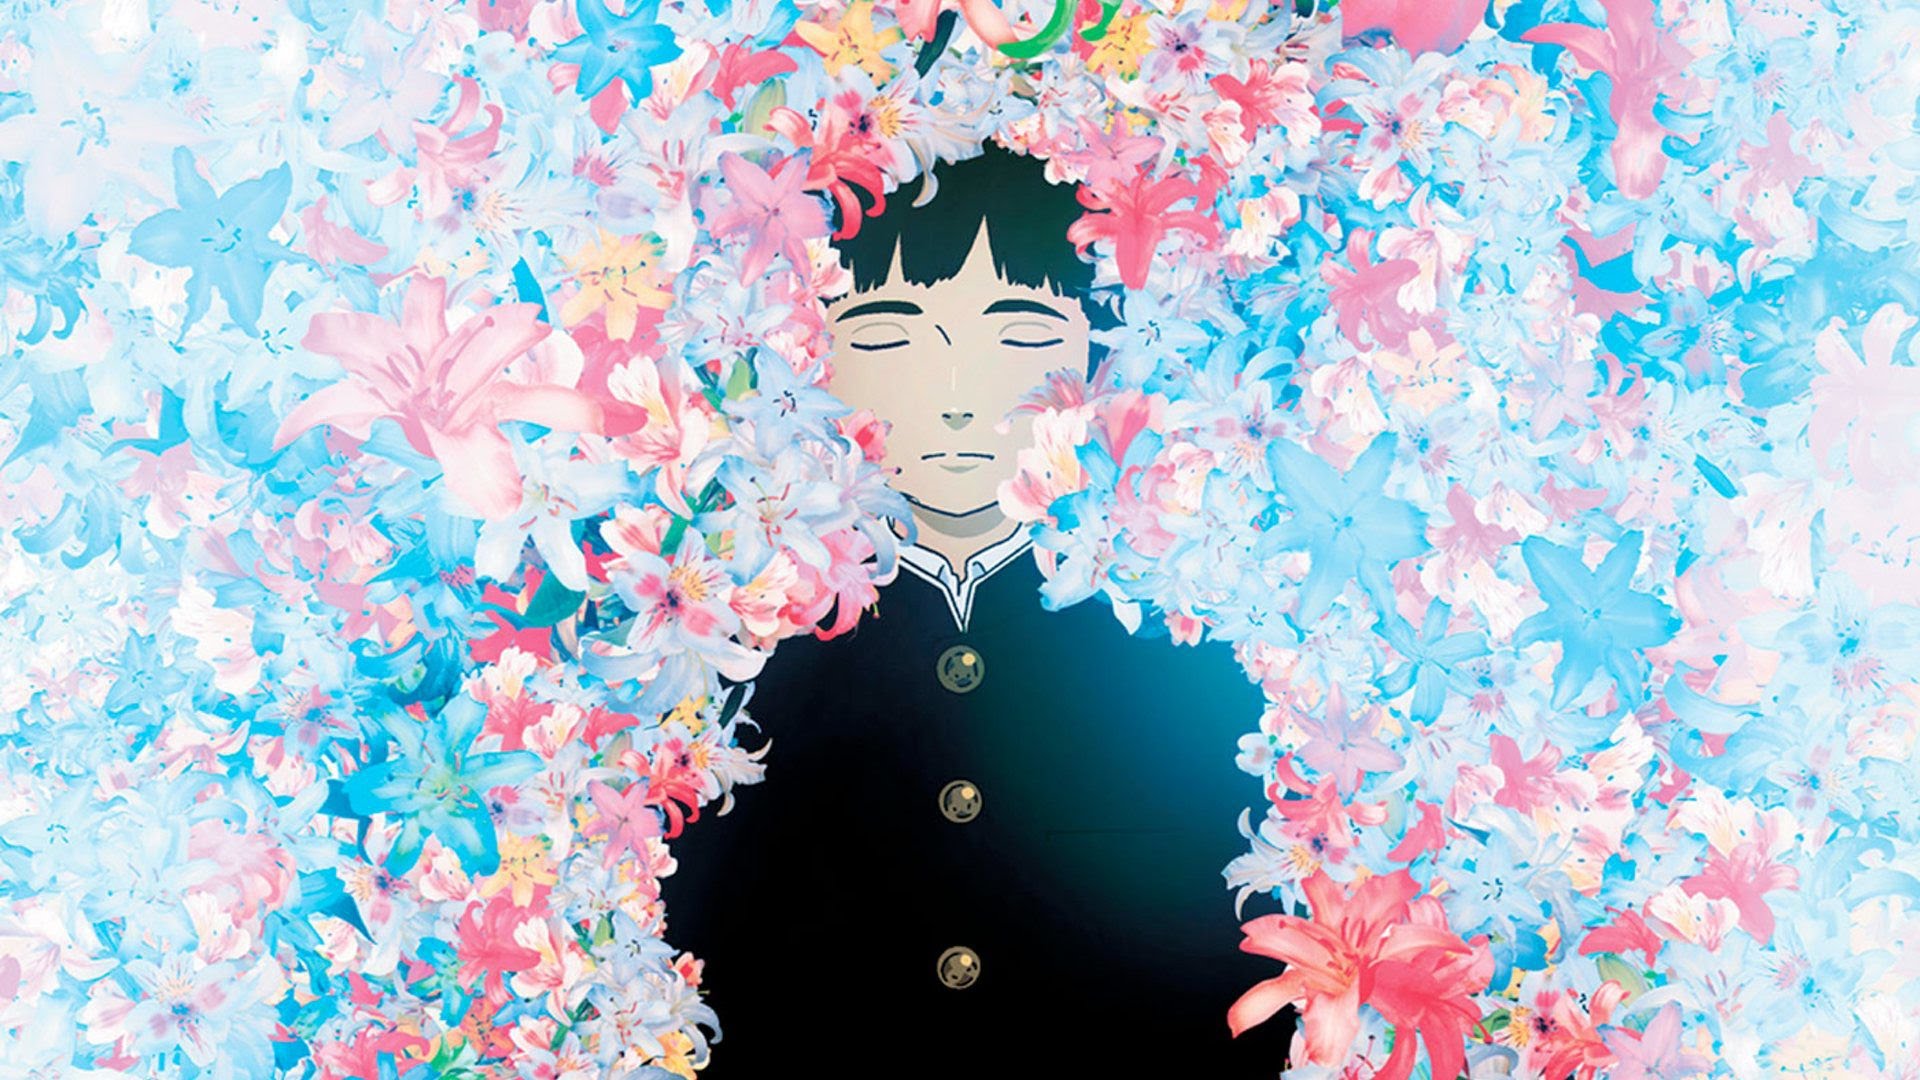 Colorful English Sub - Anime Online English Anime